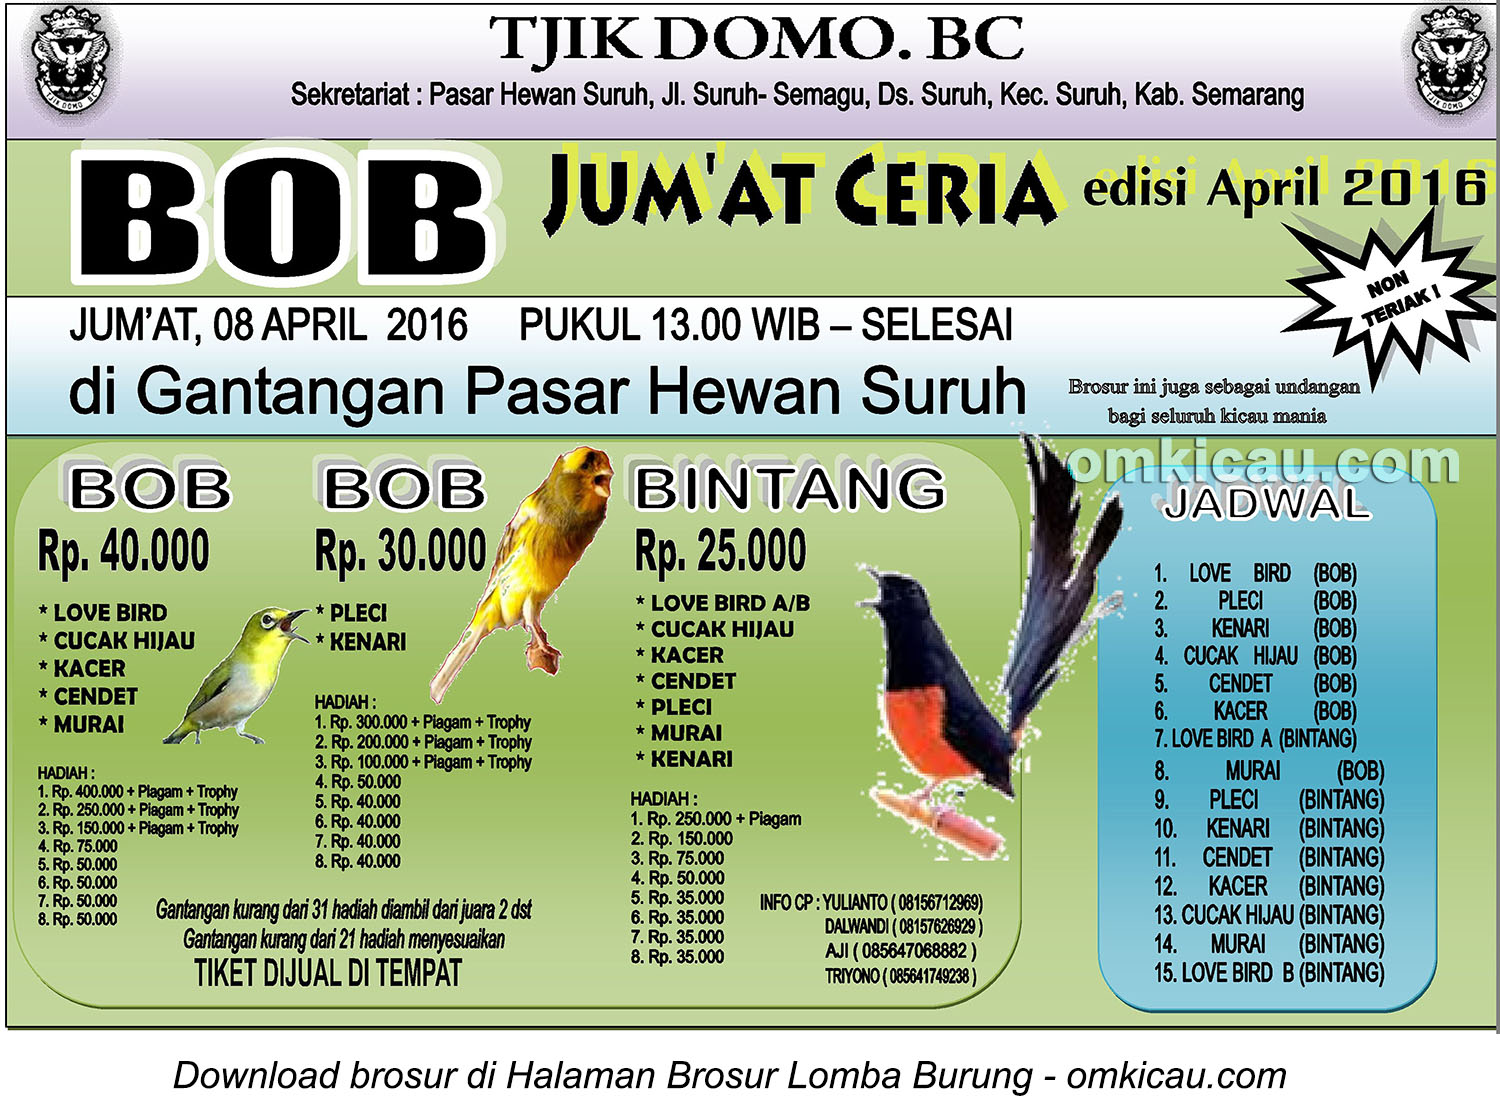 Brosur Latpres BOB Jumat Ceria - Tjik Domo BC Suruh, Kab Semarang, 8 April 2016